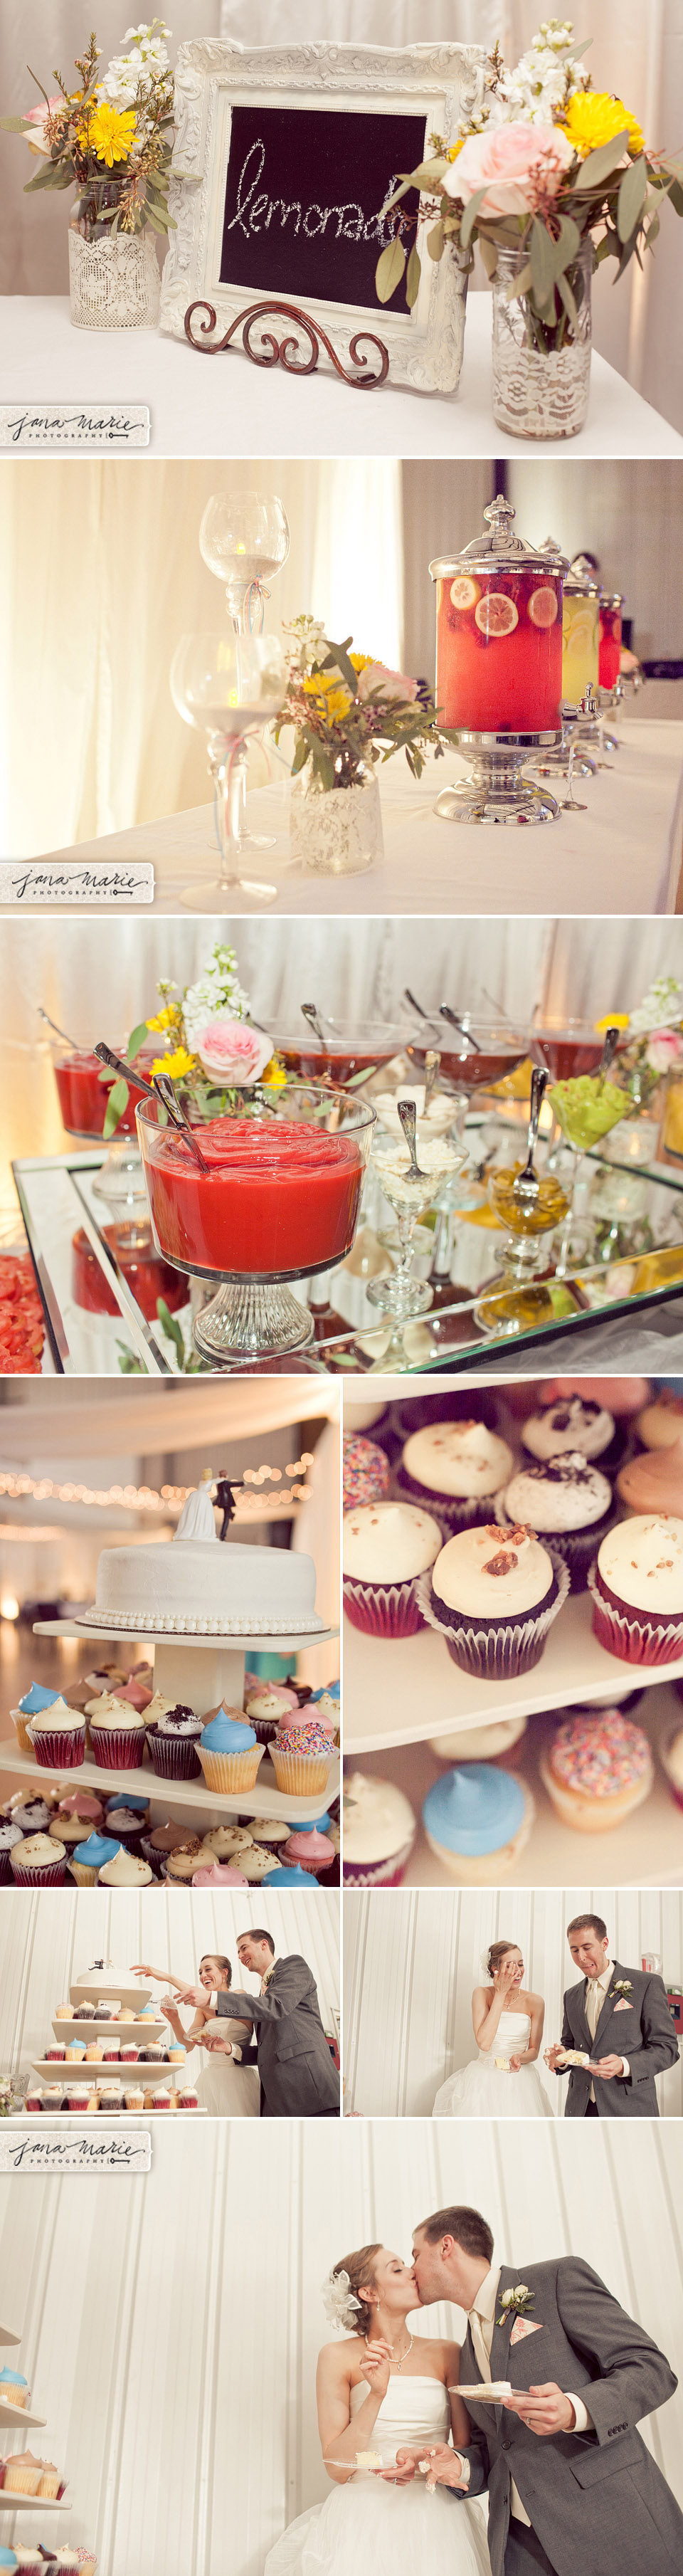 BBQ, Cupcakes, Smallcakes Cupcakery, Isham wedding, Colorful weddings, Budget receptions